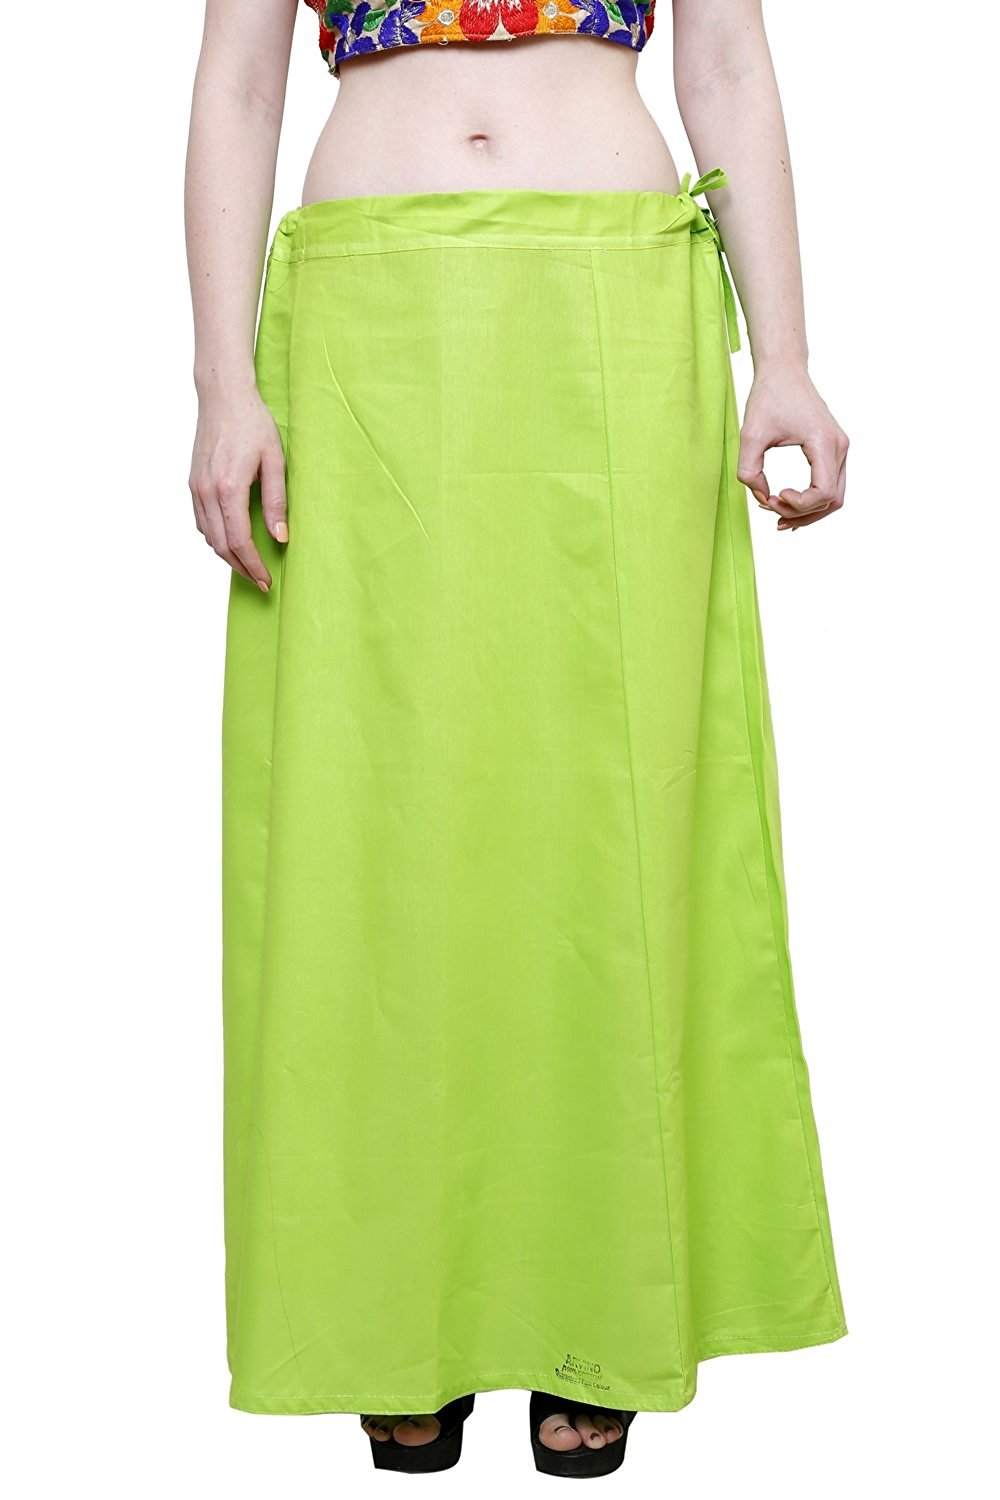 Stylesindia Women's Cotton Readymade Indian Inskirt Saree petticoats Underskirt - Free Size-Lime green